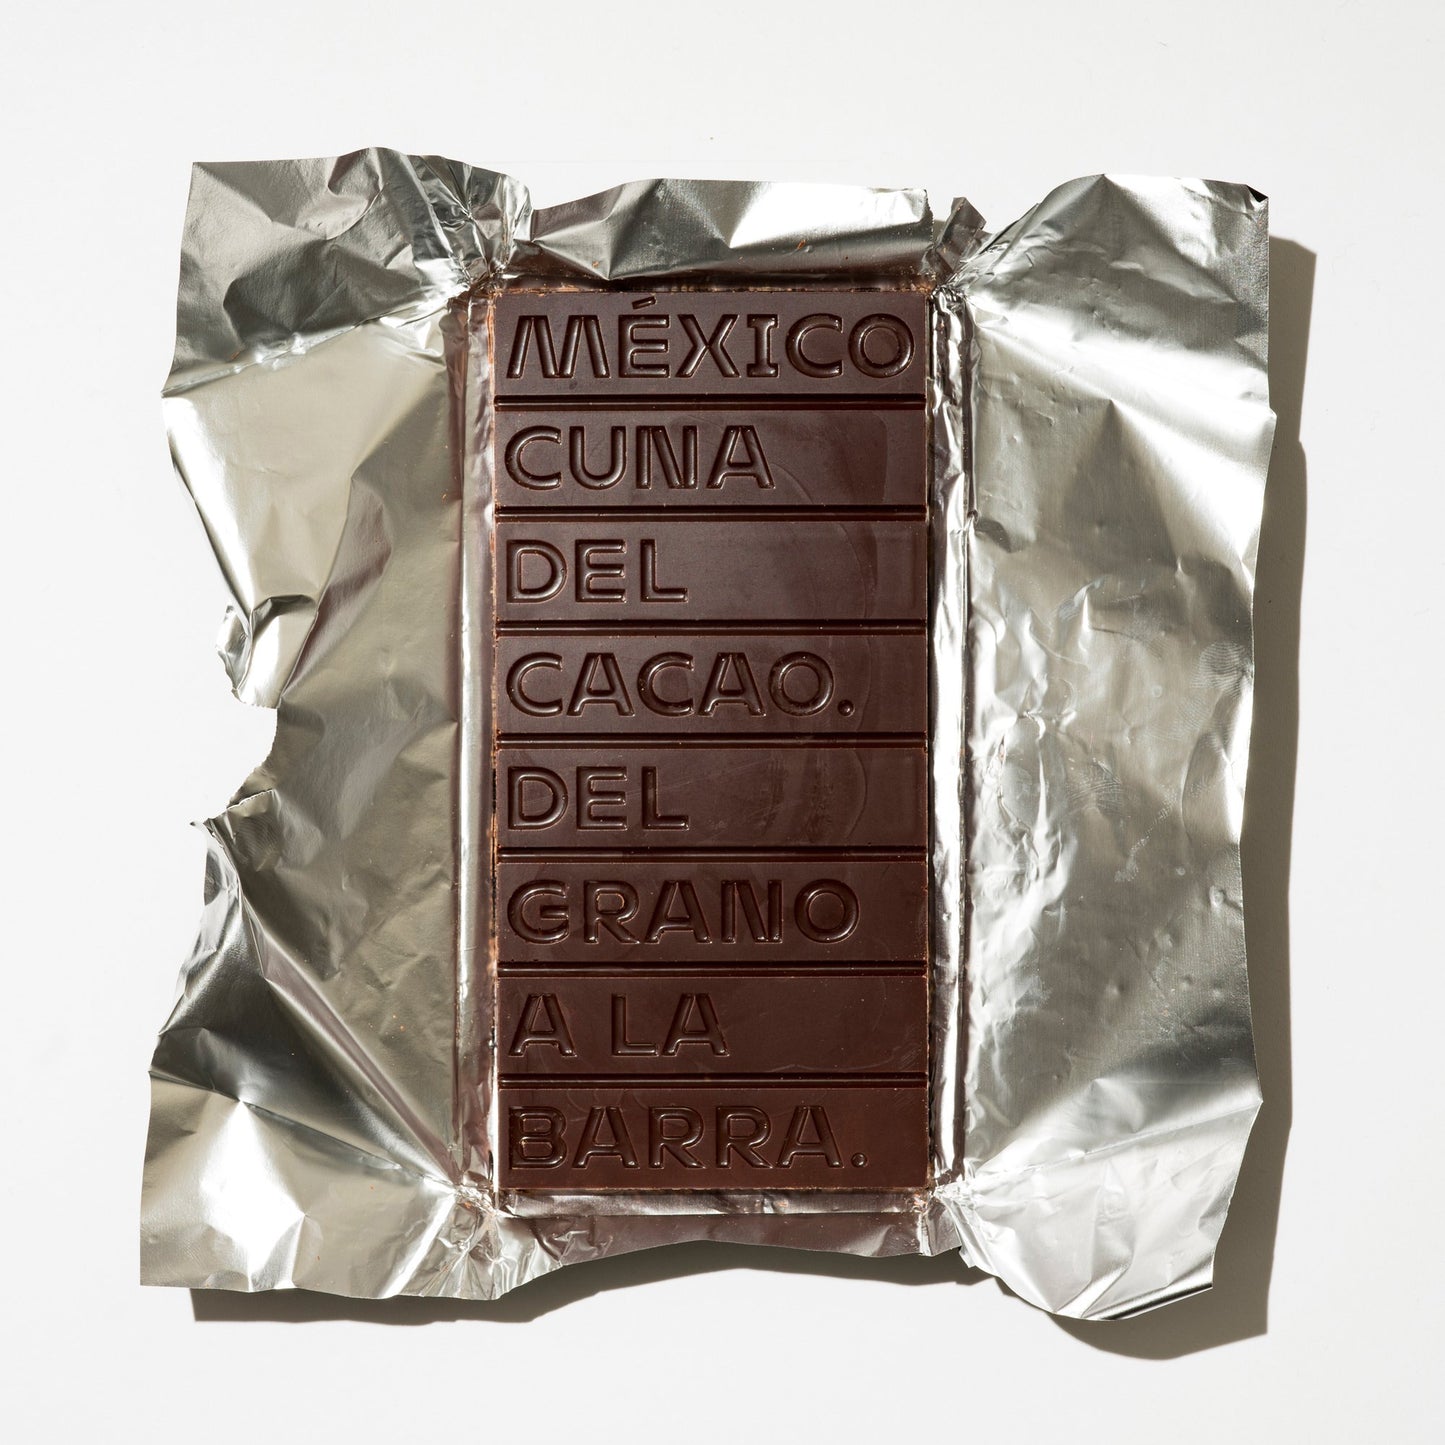 Cuna de Piedra 73% Chocolate Negro Mexicano con Mezcal Reposado | Cacao tradicional mexicano